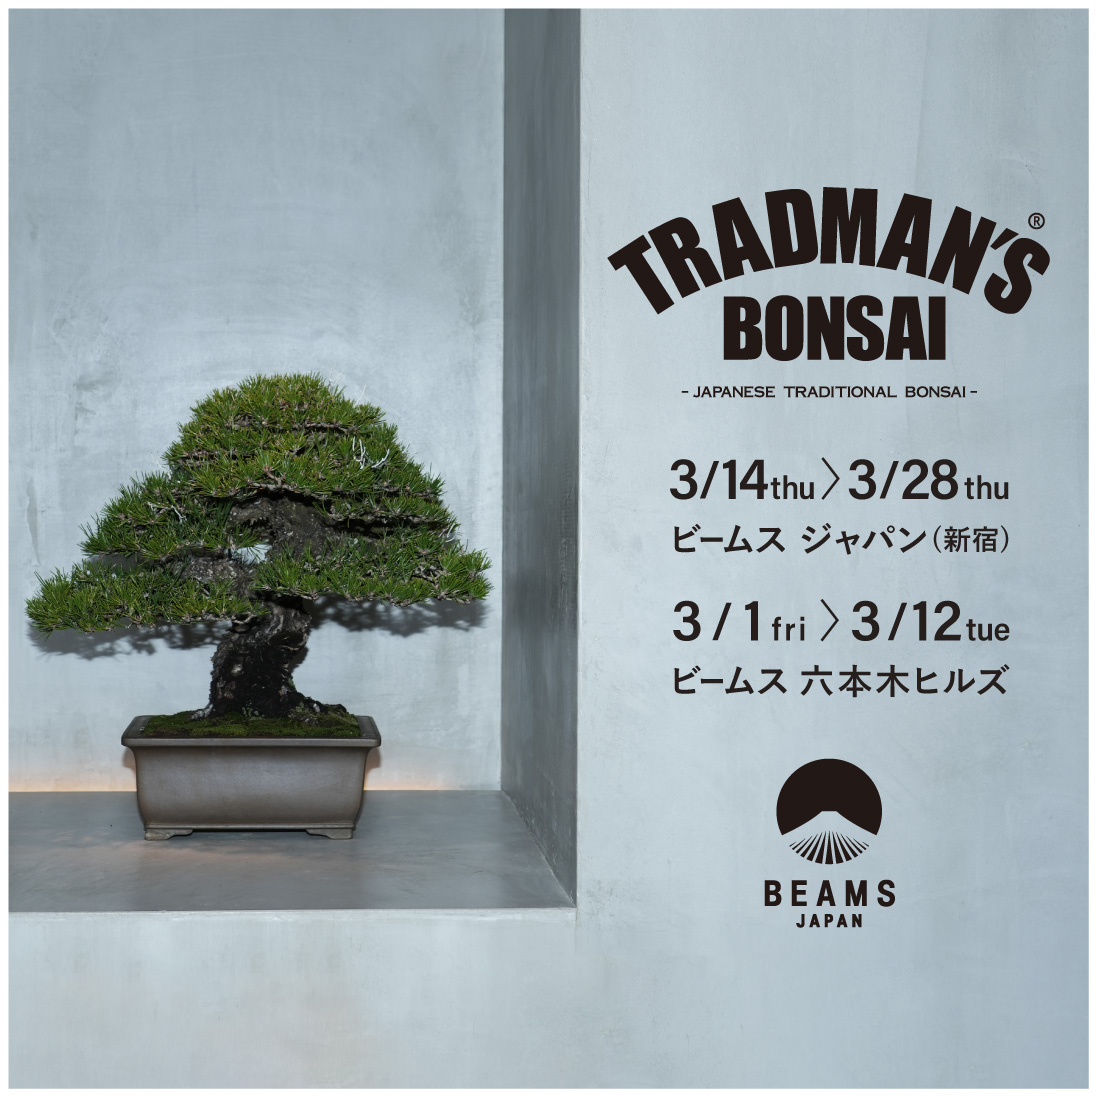 TRADMAN'S BONSAI OFFICIAL SITE